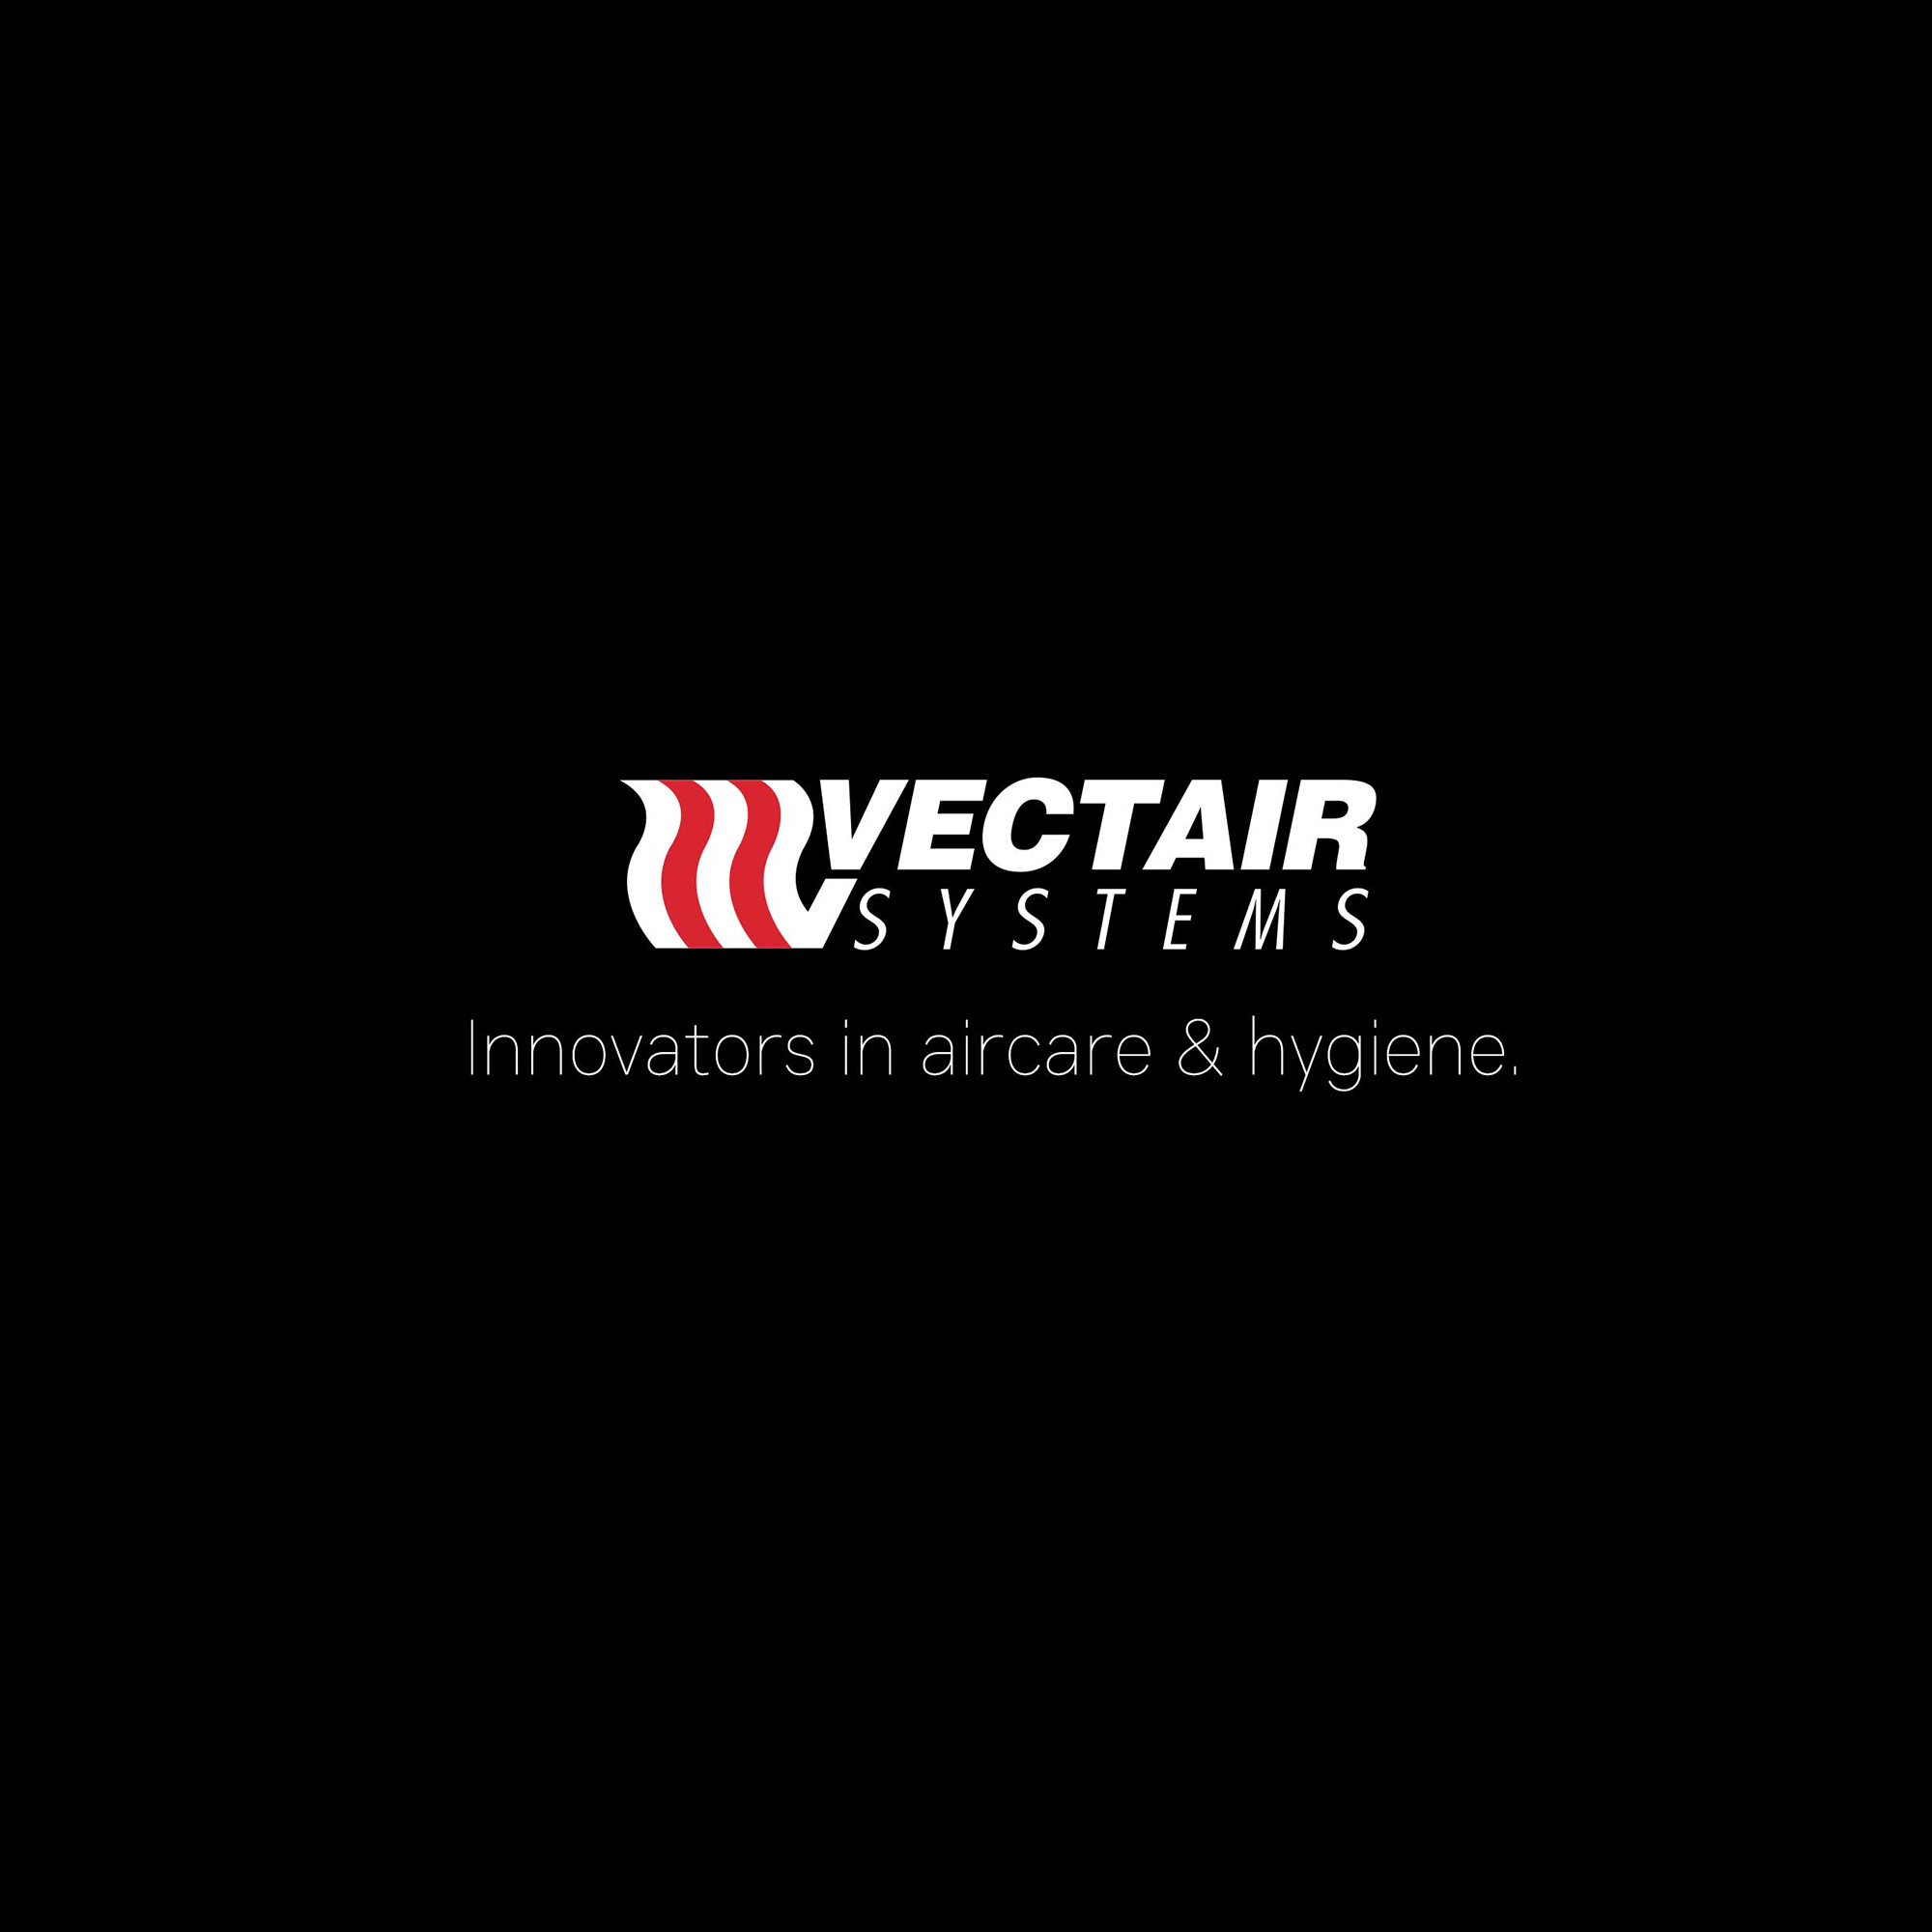 Vectair Systems - open